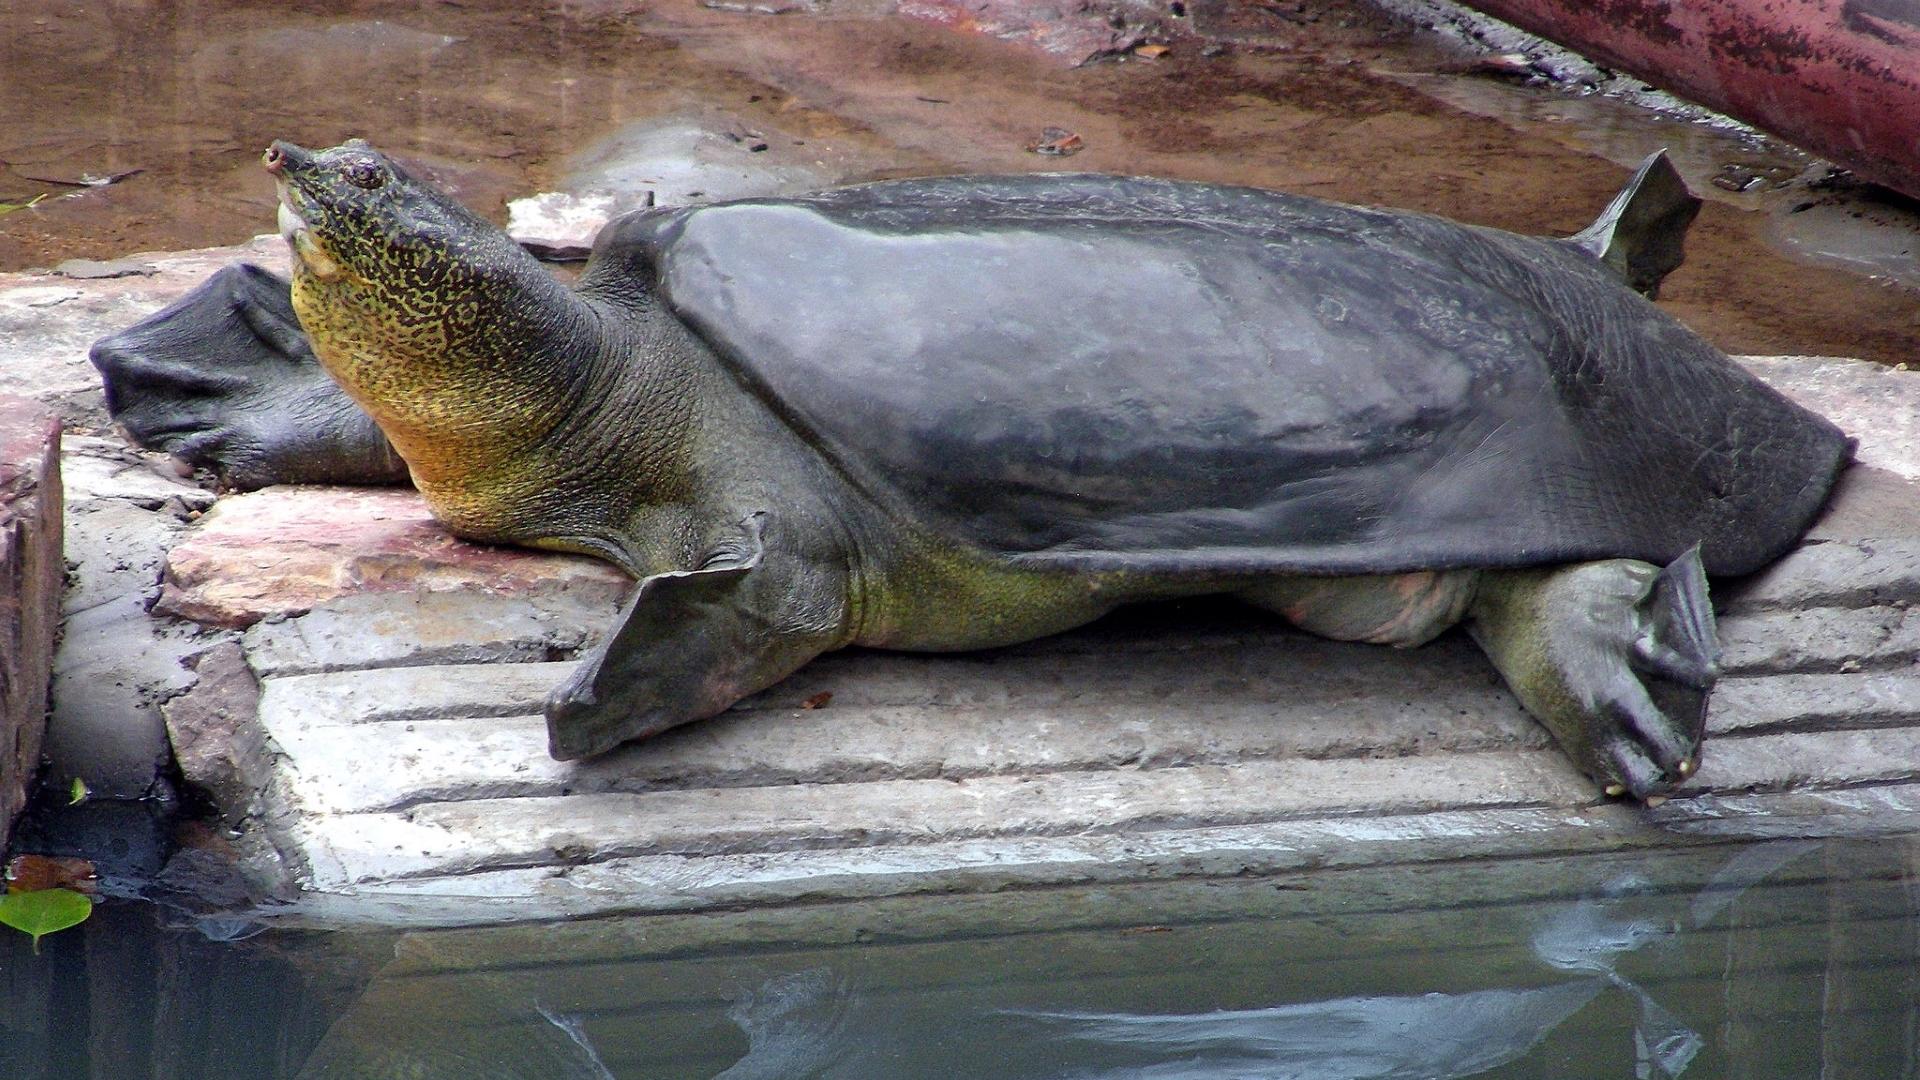 Попытка спасти мягкотелую черепаху Rafetus swinhoei провалилась